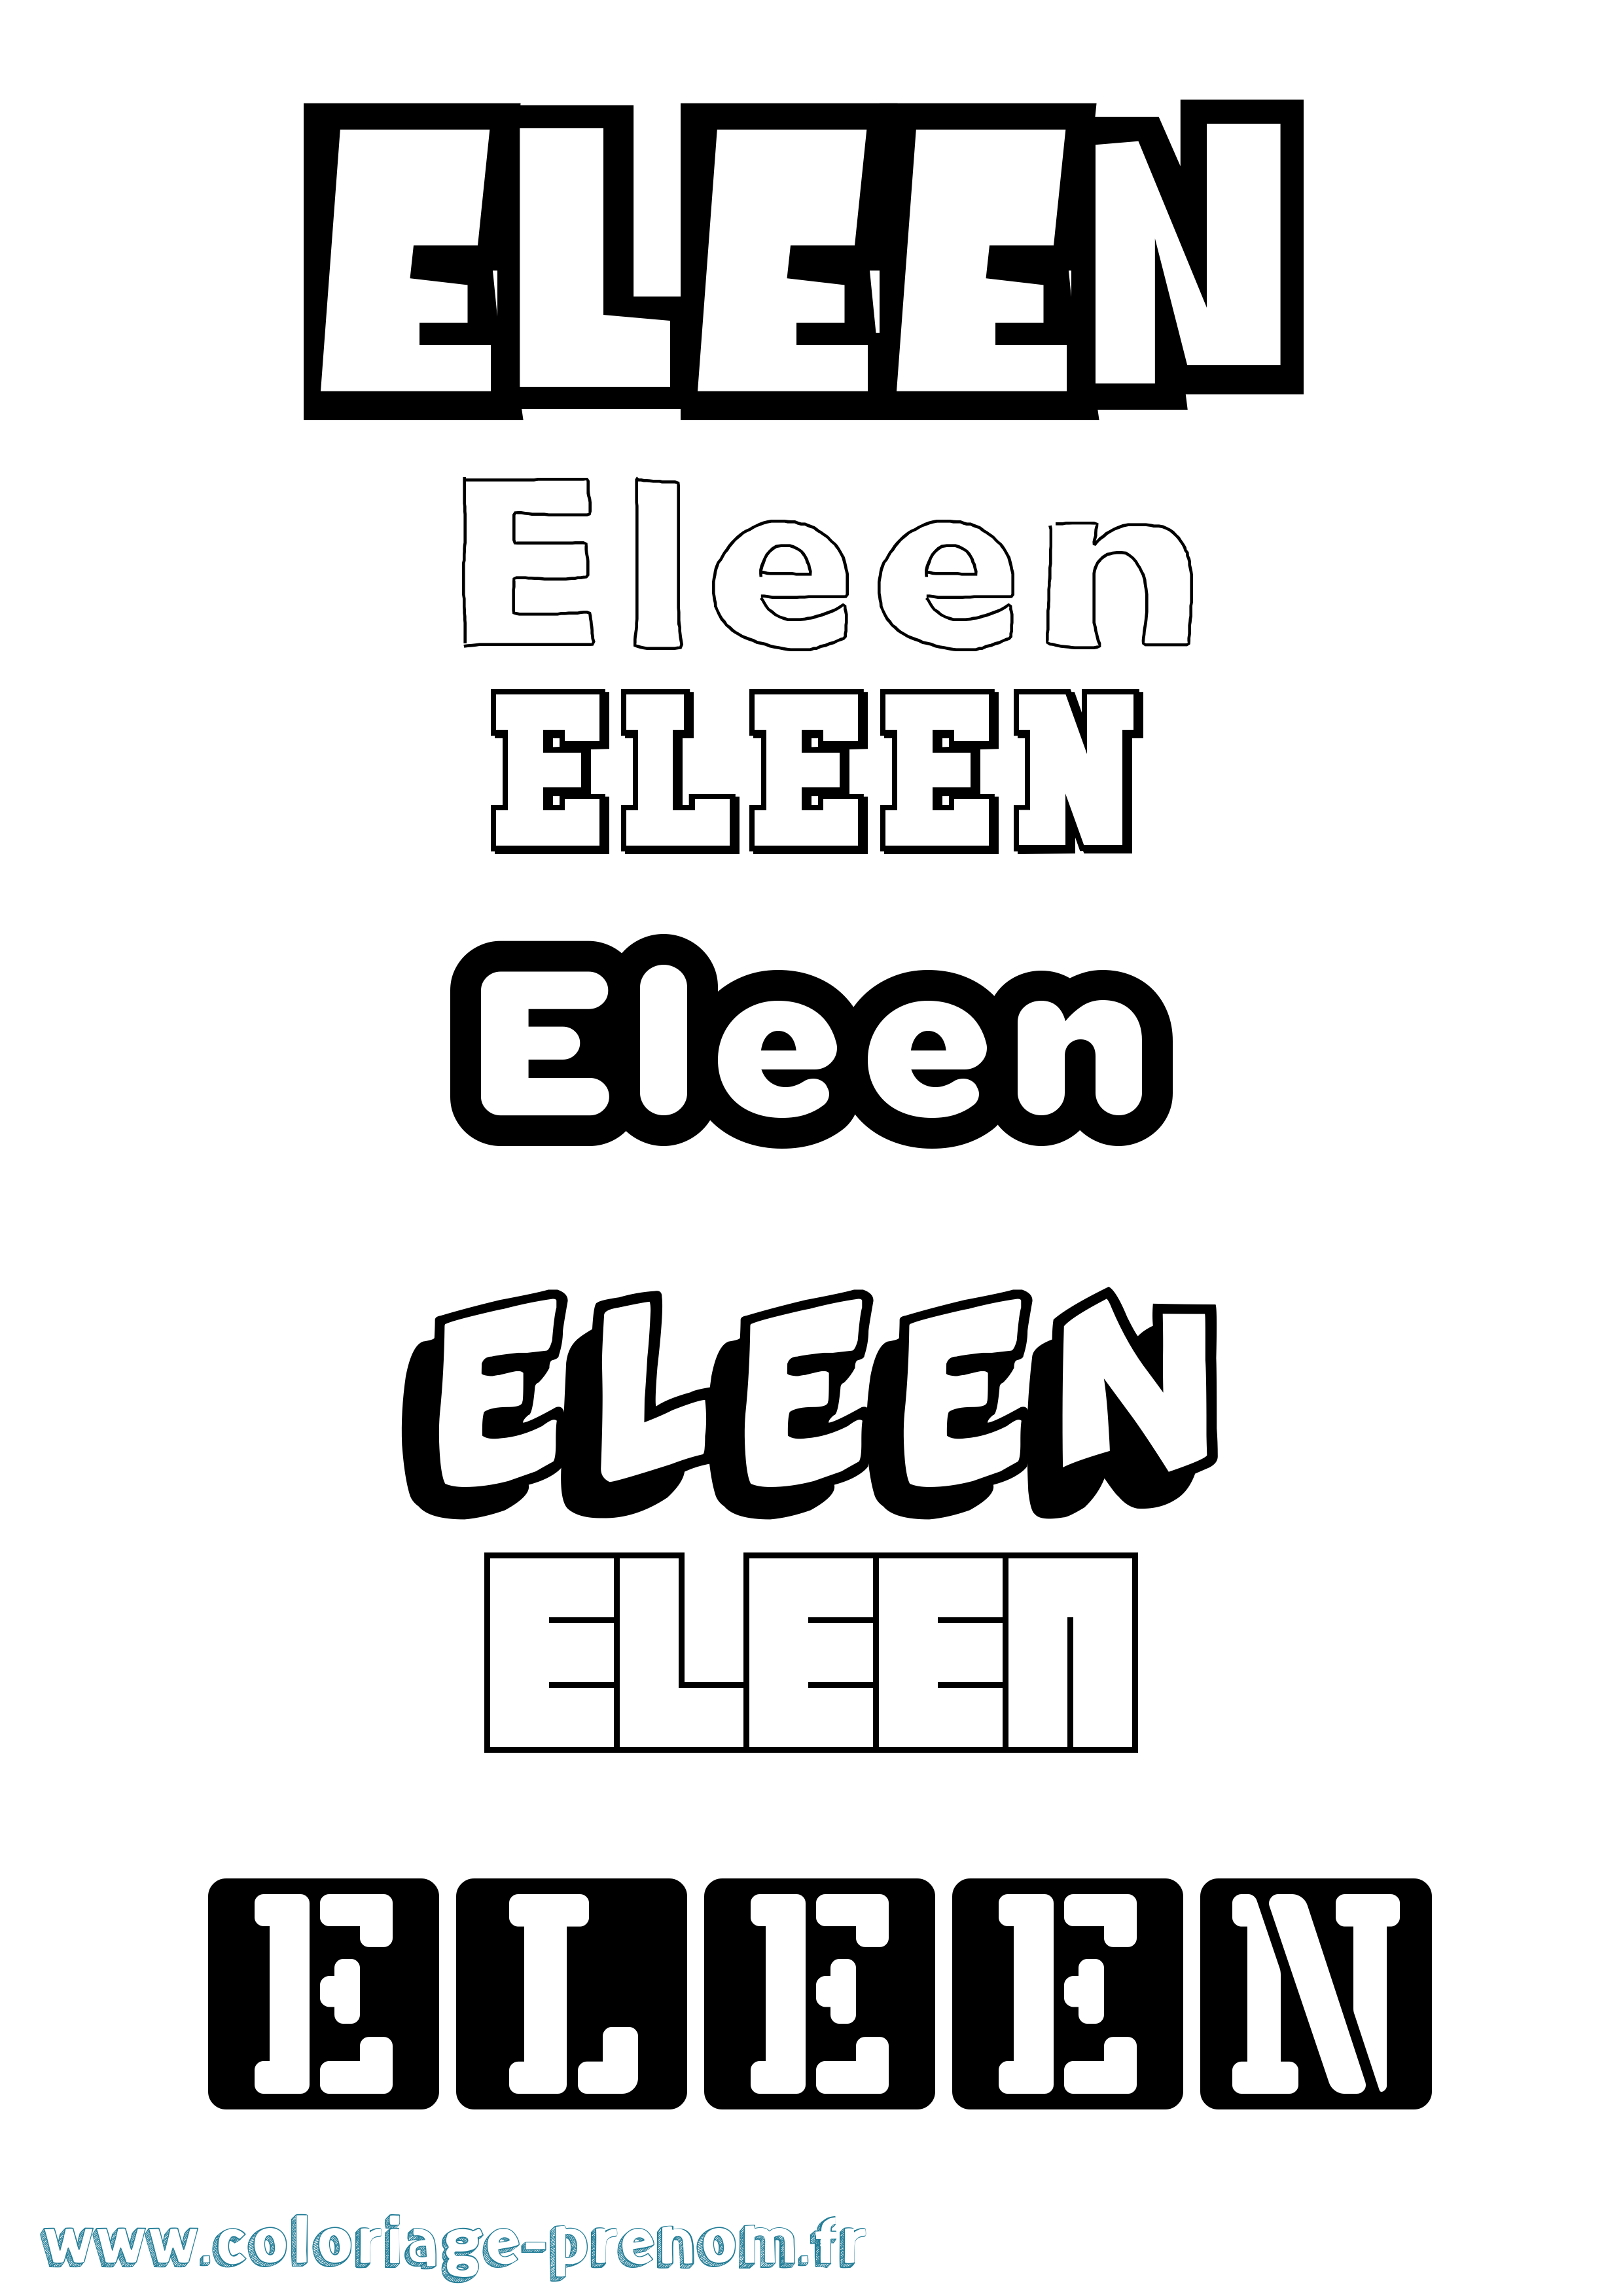 Coloriage prénom Eleen Simple